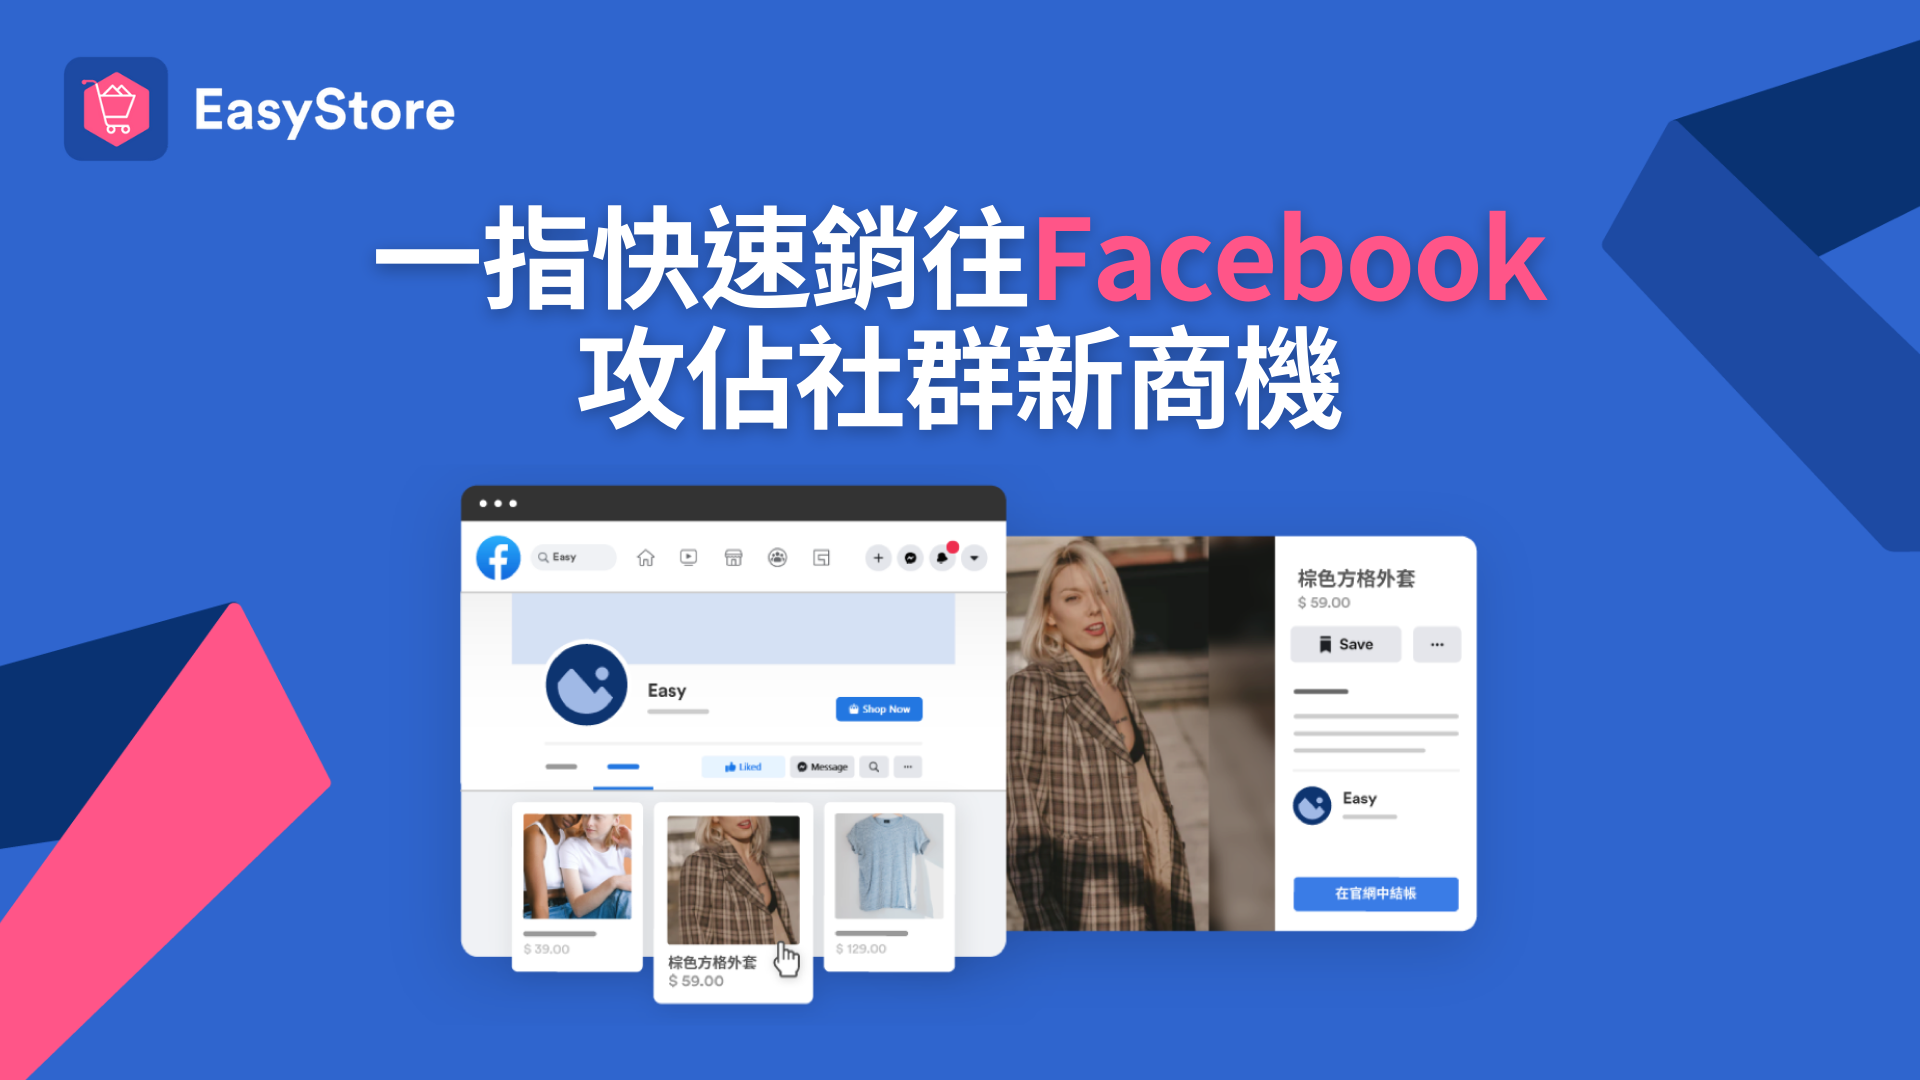 EasyStore助您一指快速銷往Facebook，攻佔社群新商機 | EasyStore